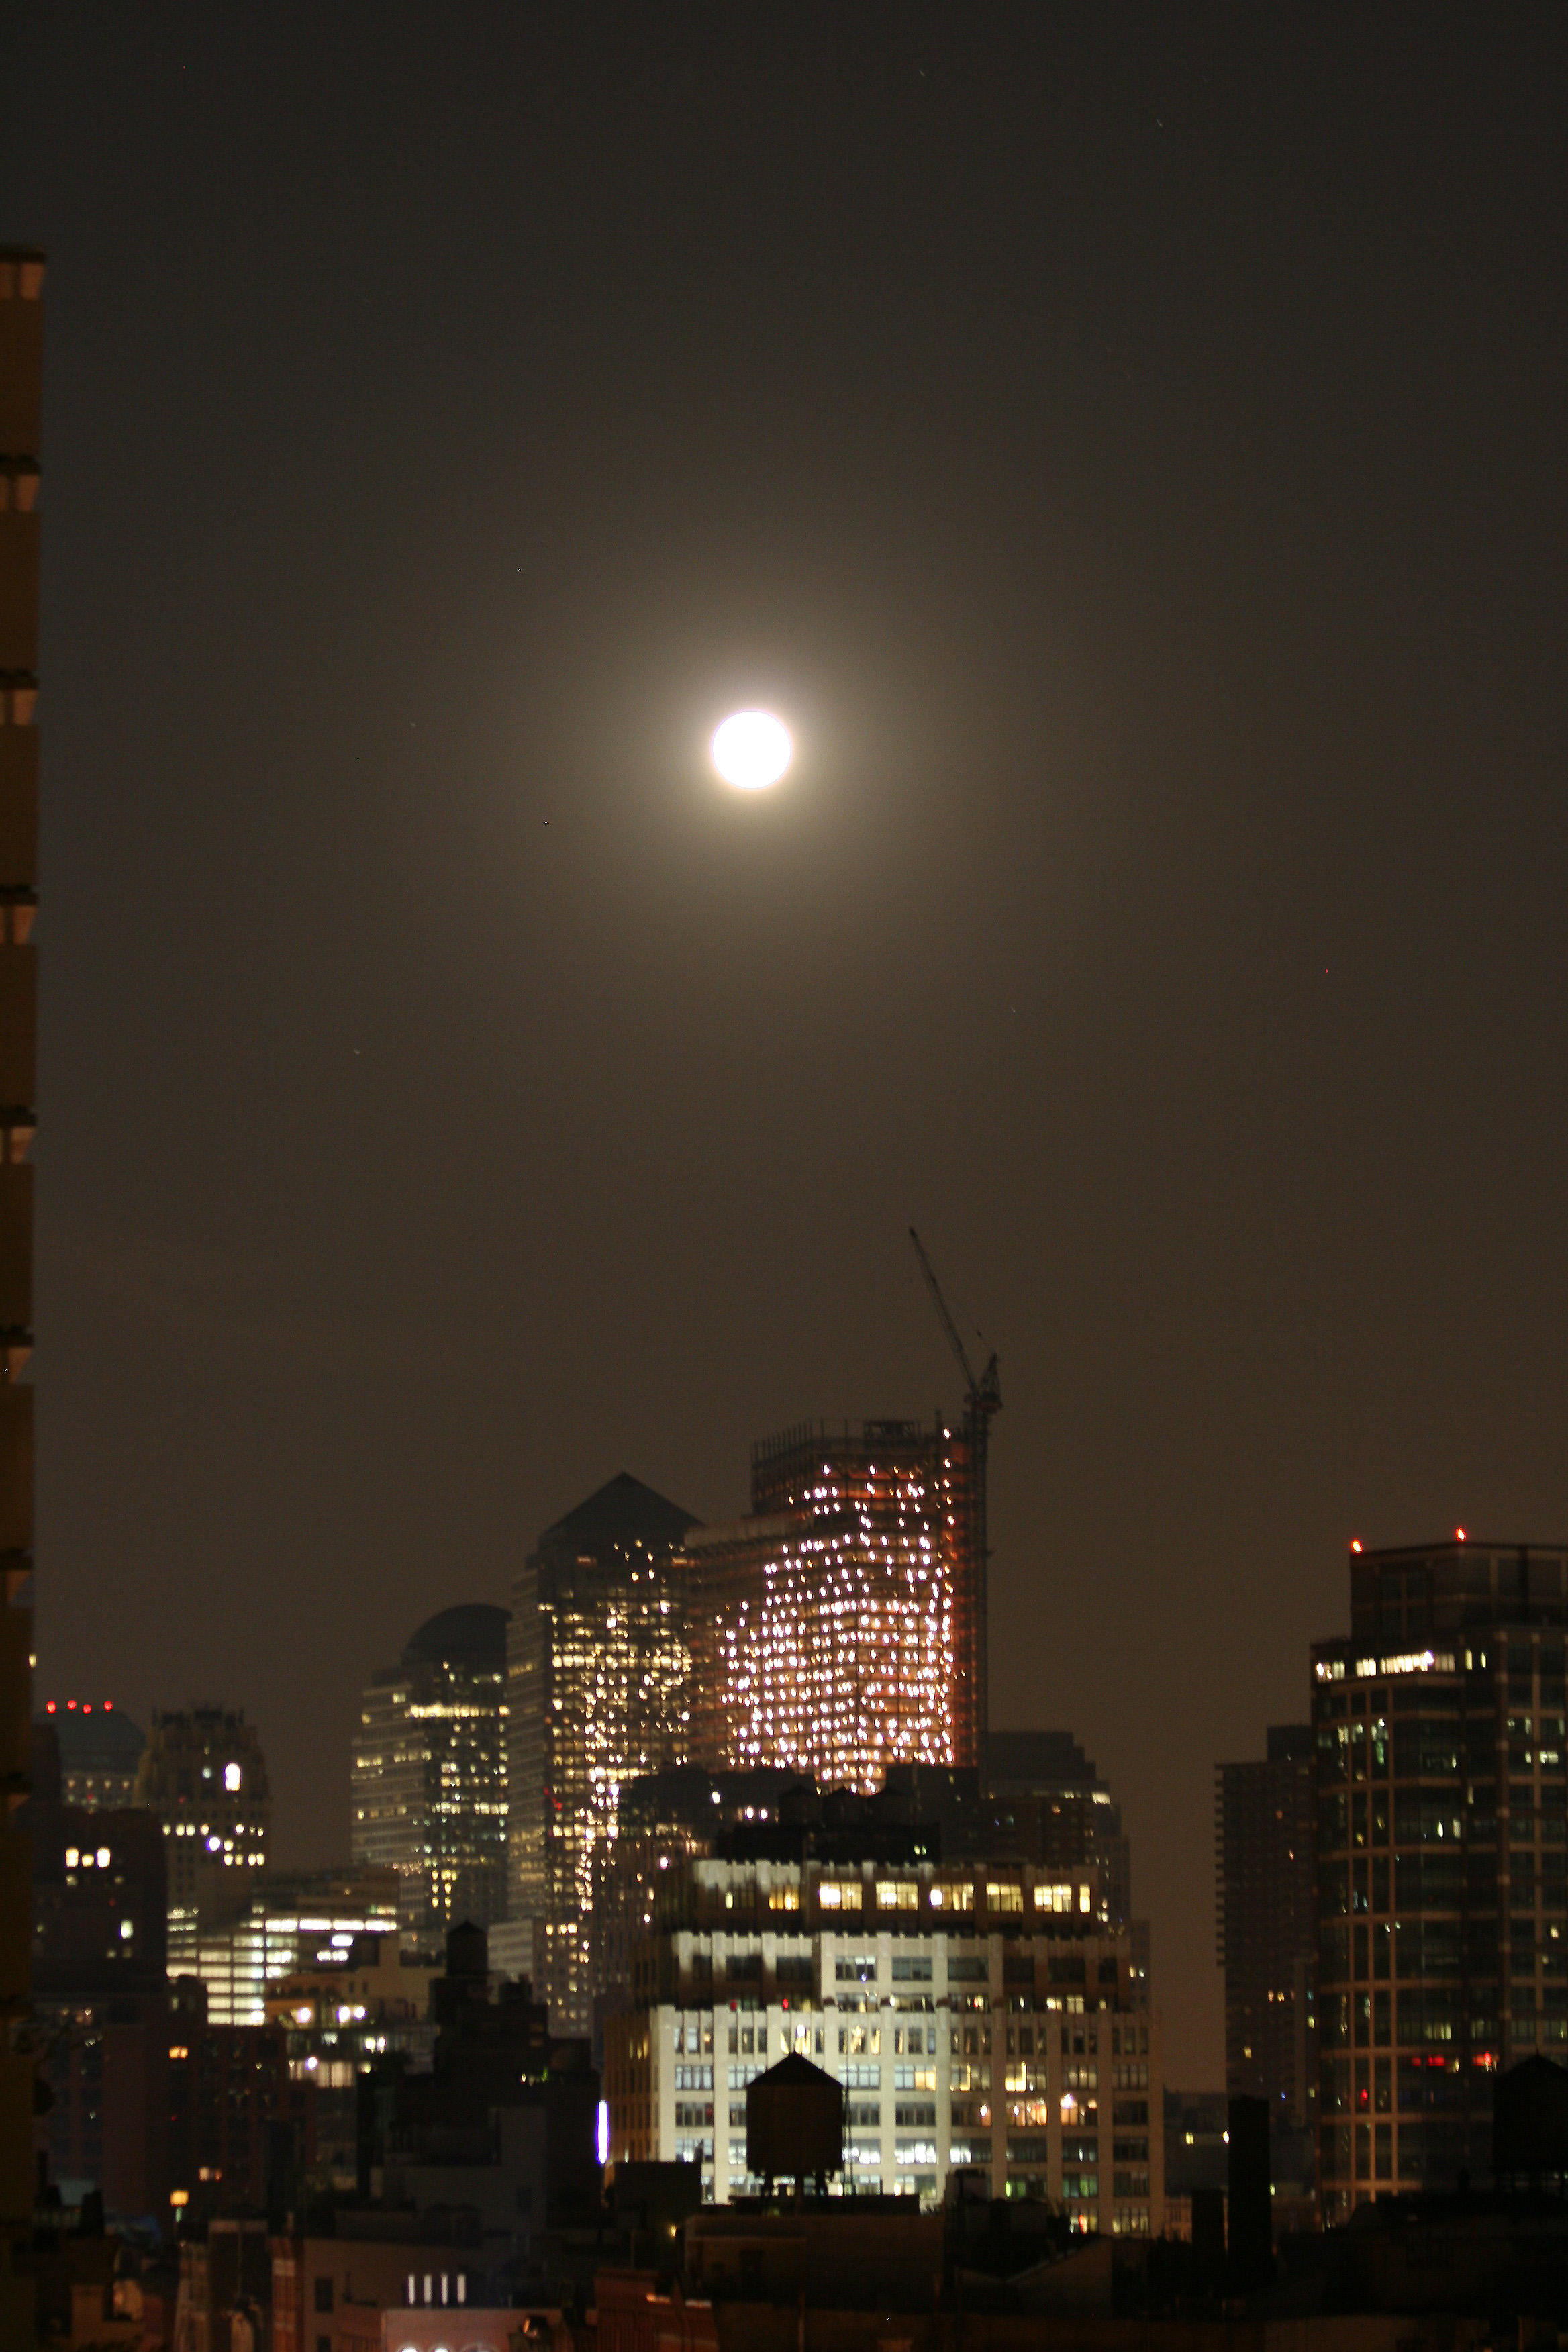 Full Moon - Downtown Manhattan